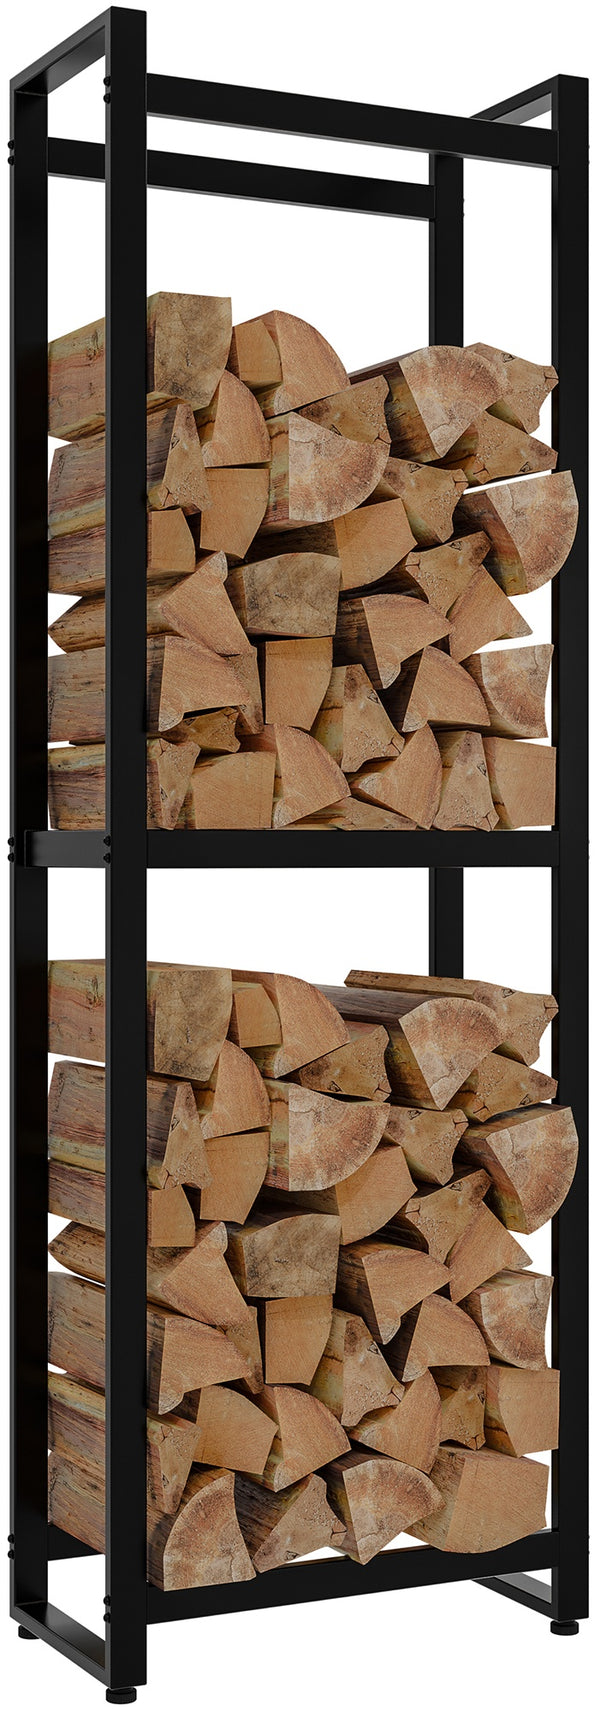 Morson brandhoutstandaard